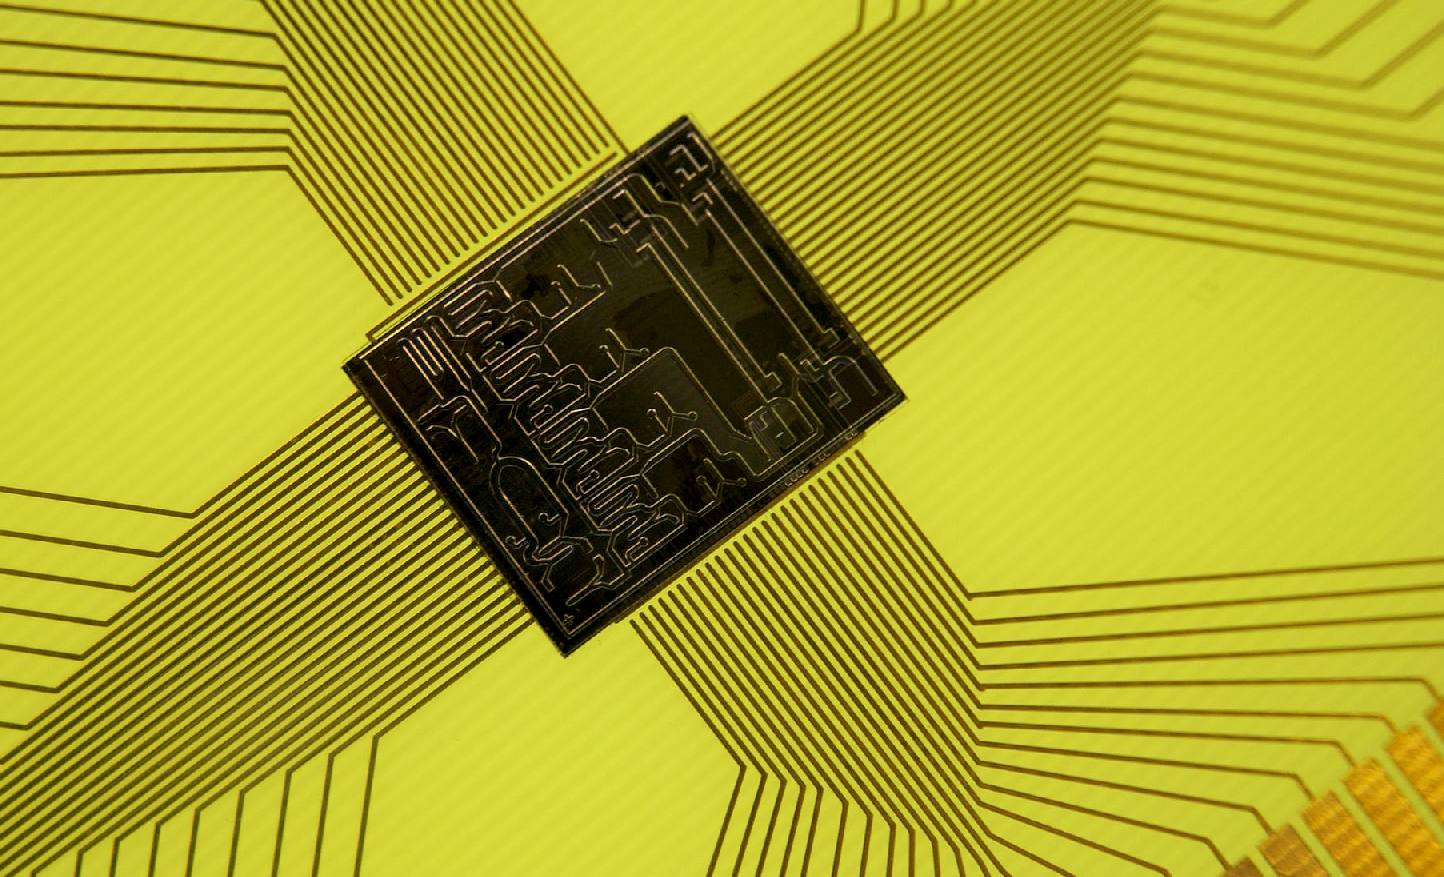 A whole laboratory on a single computer chip